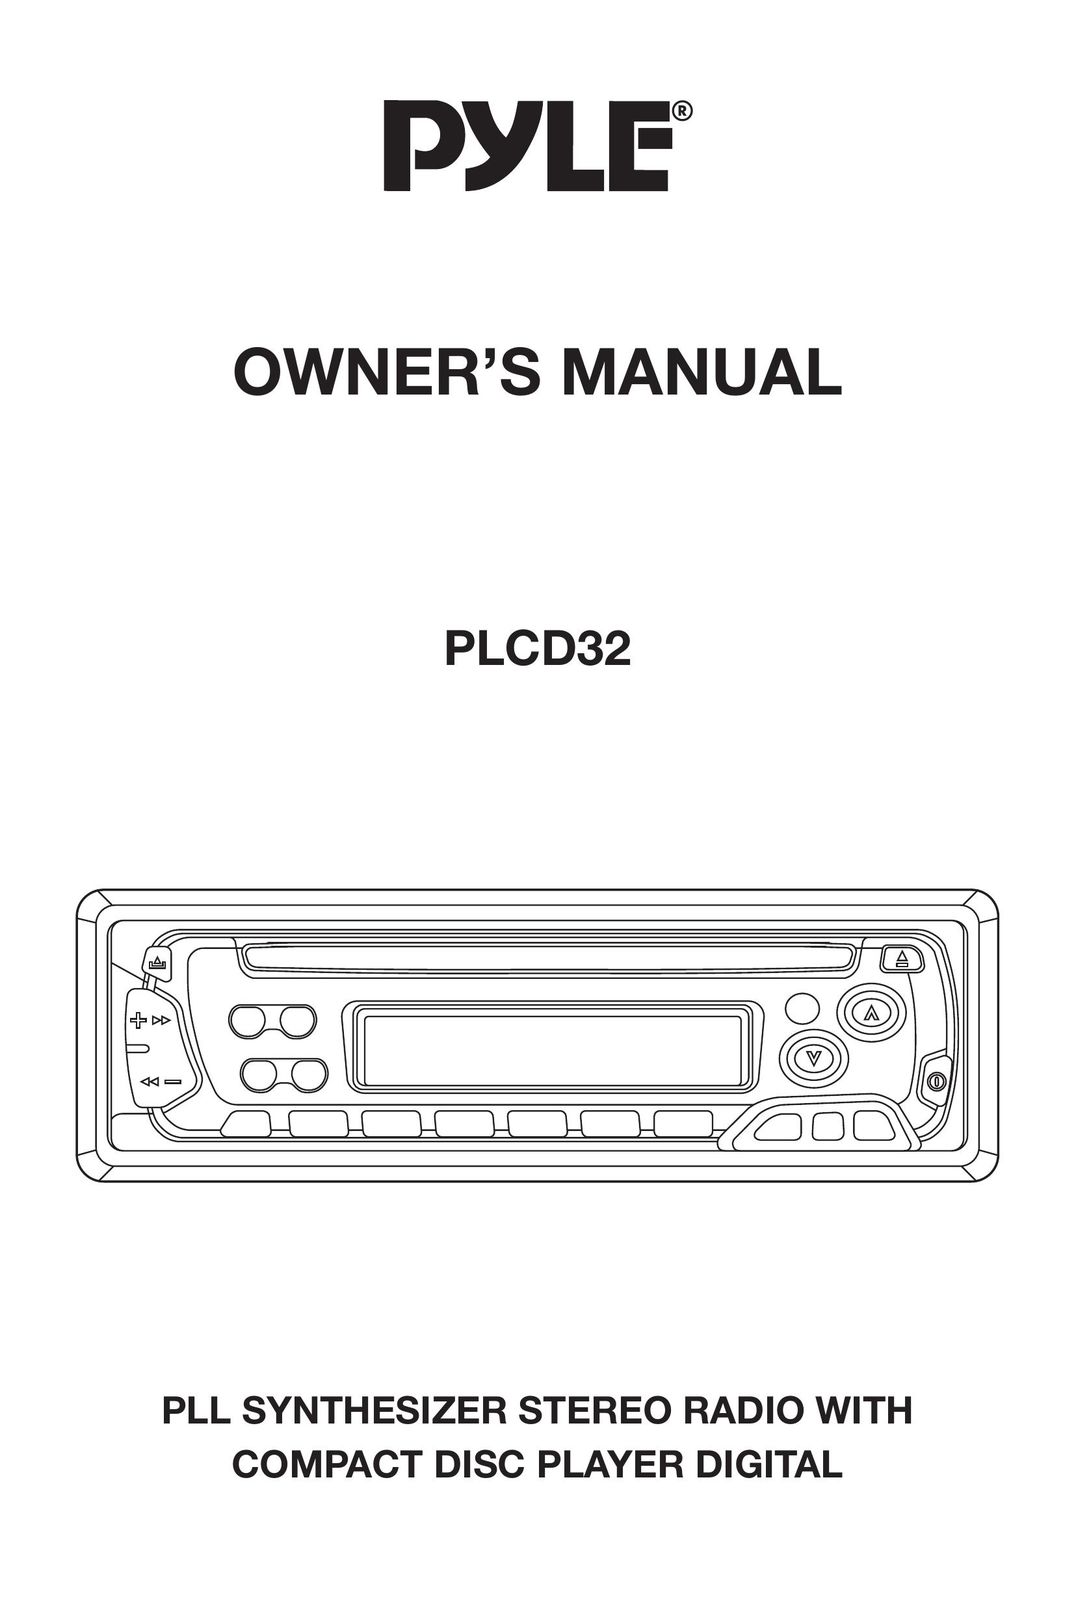 Radio Shack PLCD32 Car Stereo System User Manual